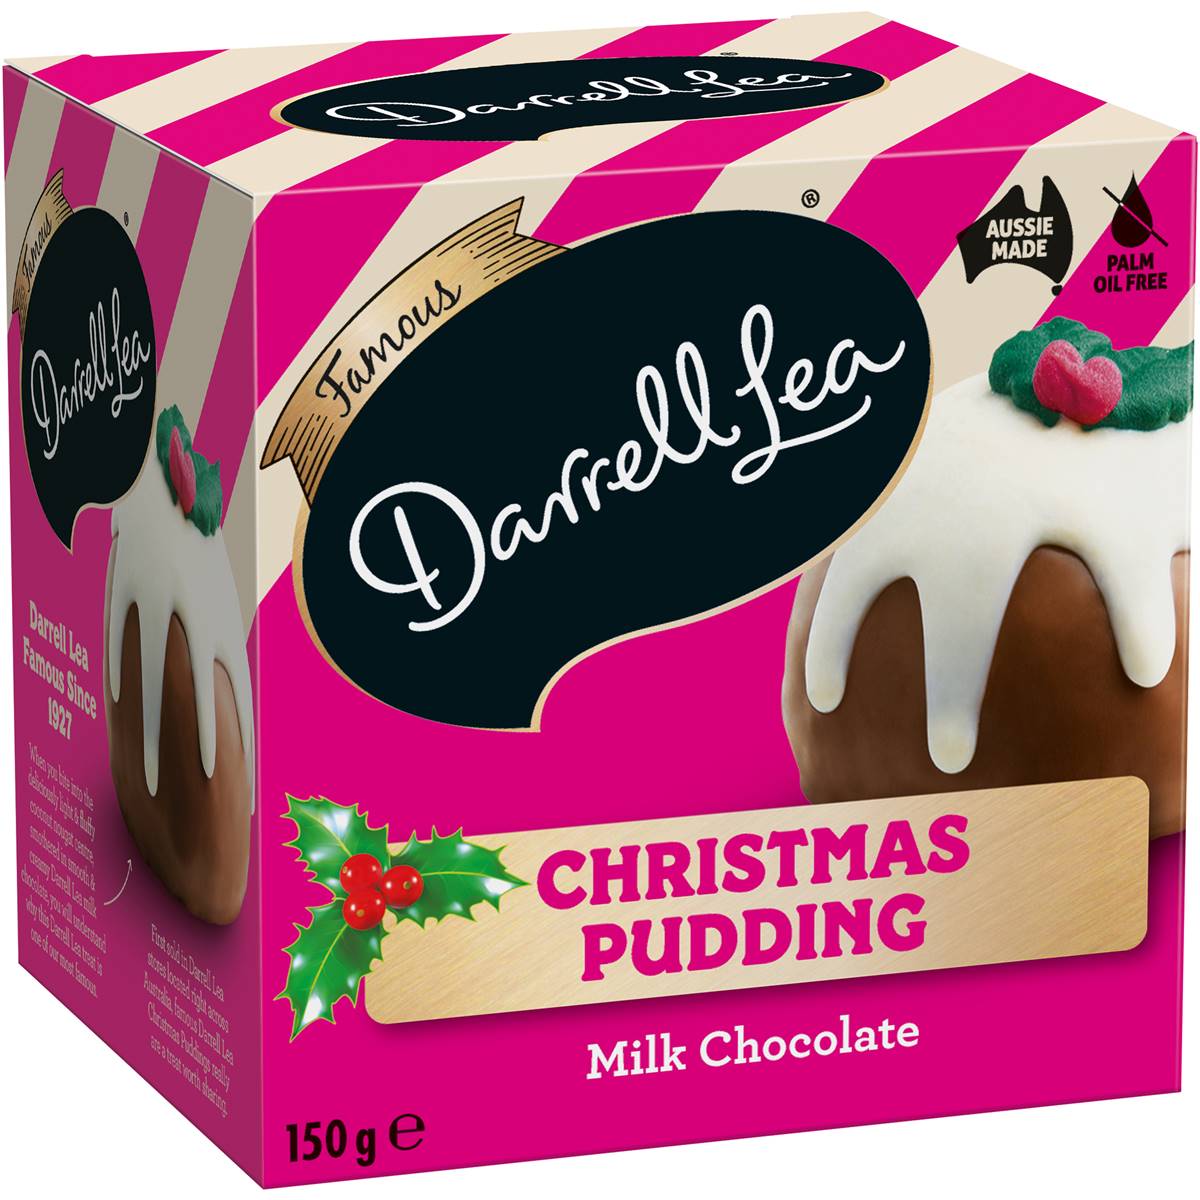 Darrell Lea Milk Chocolate Nougat Pudding 150g Box